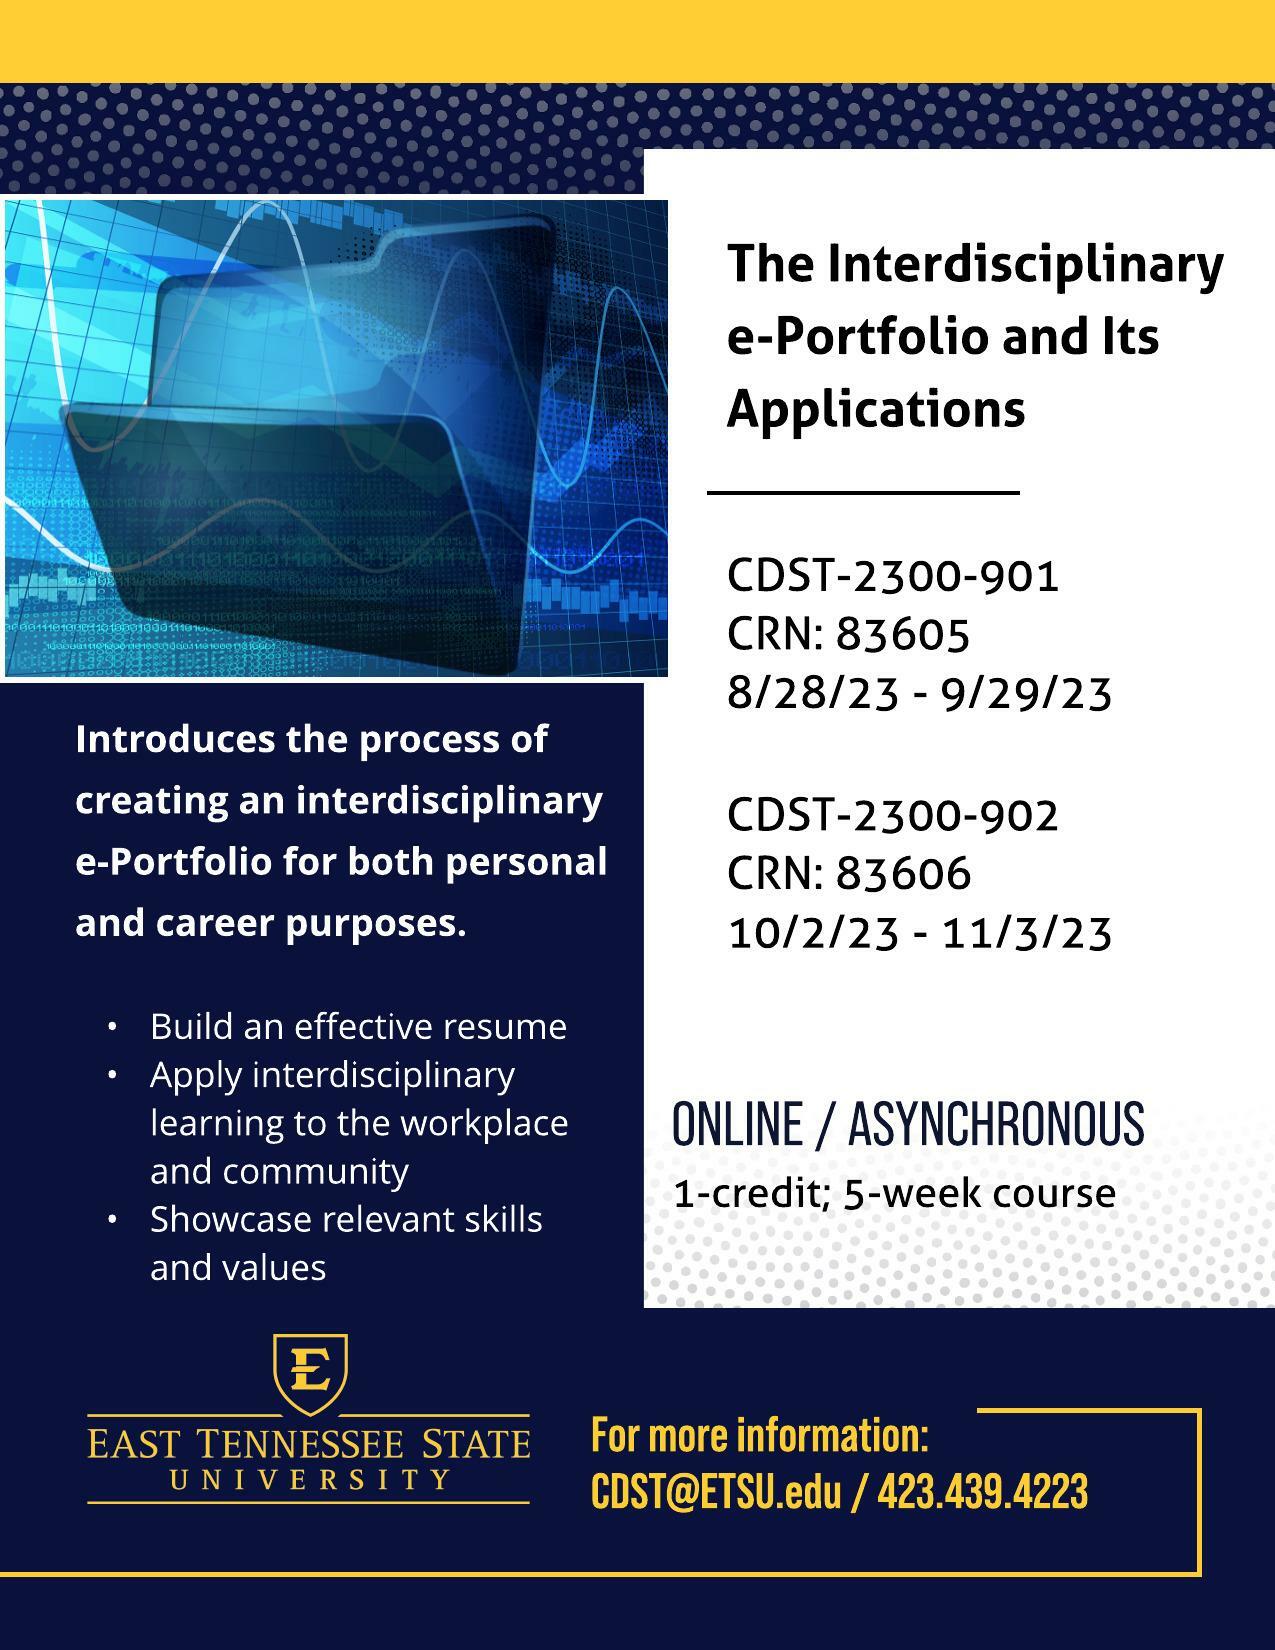 The Interdisciplinary e-Portfolio and Its Applications